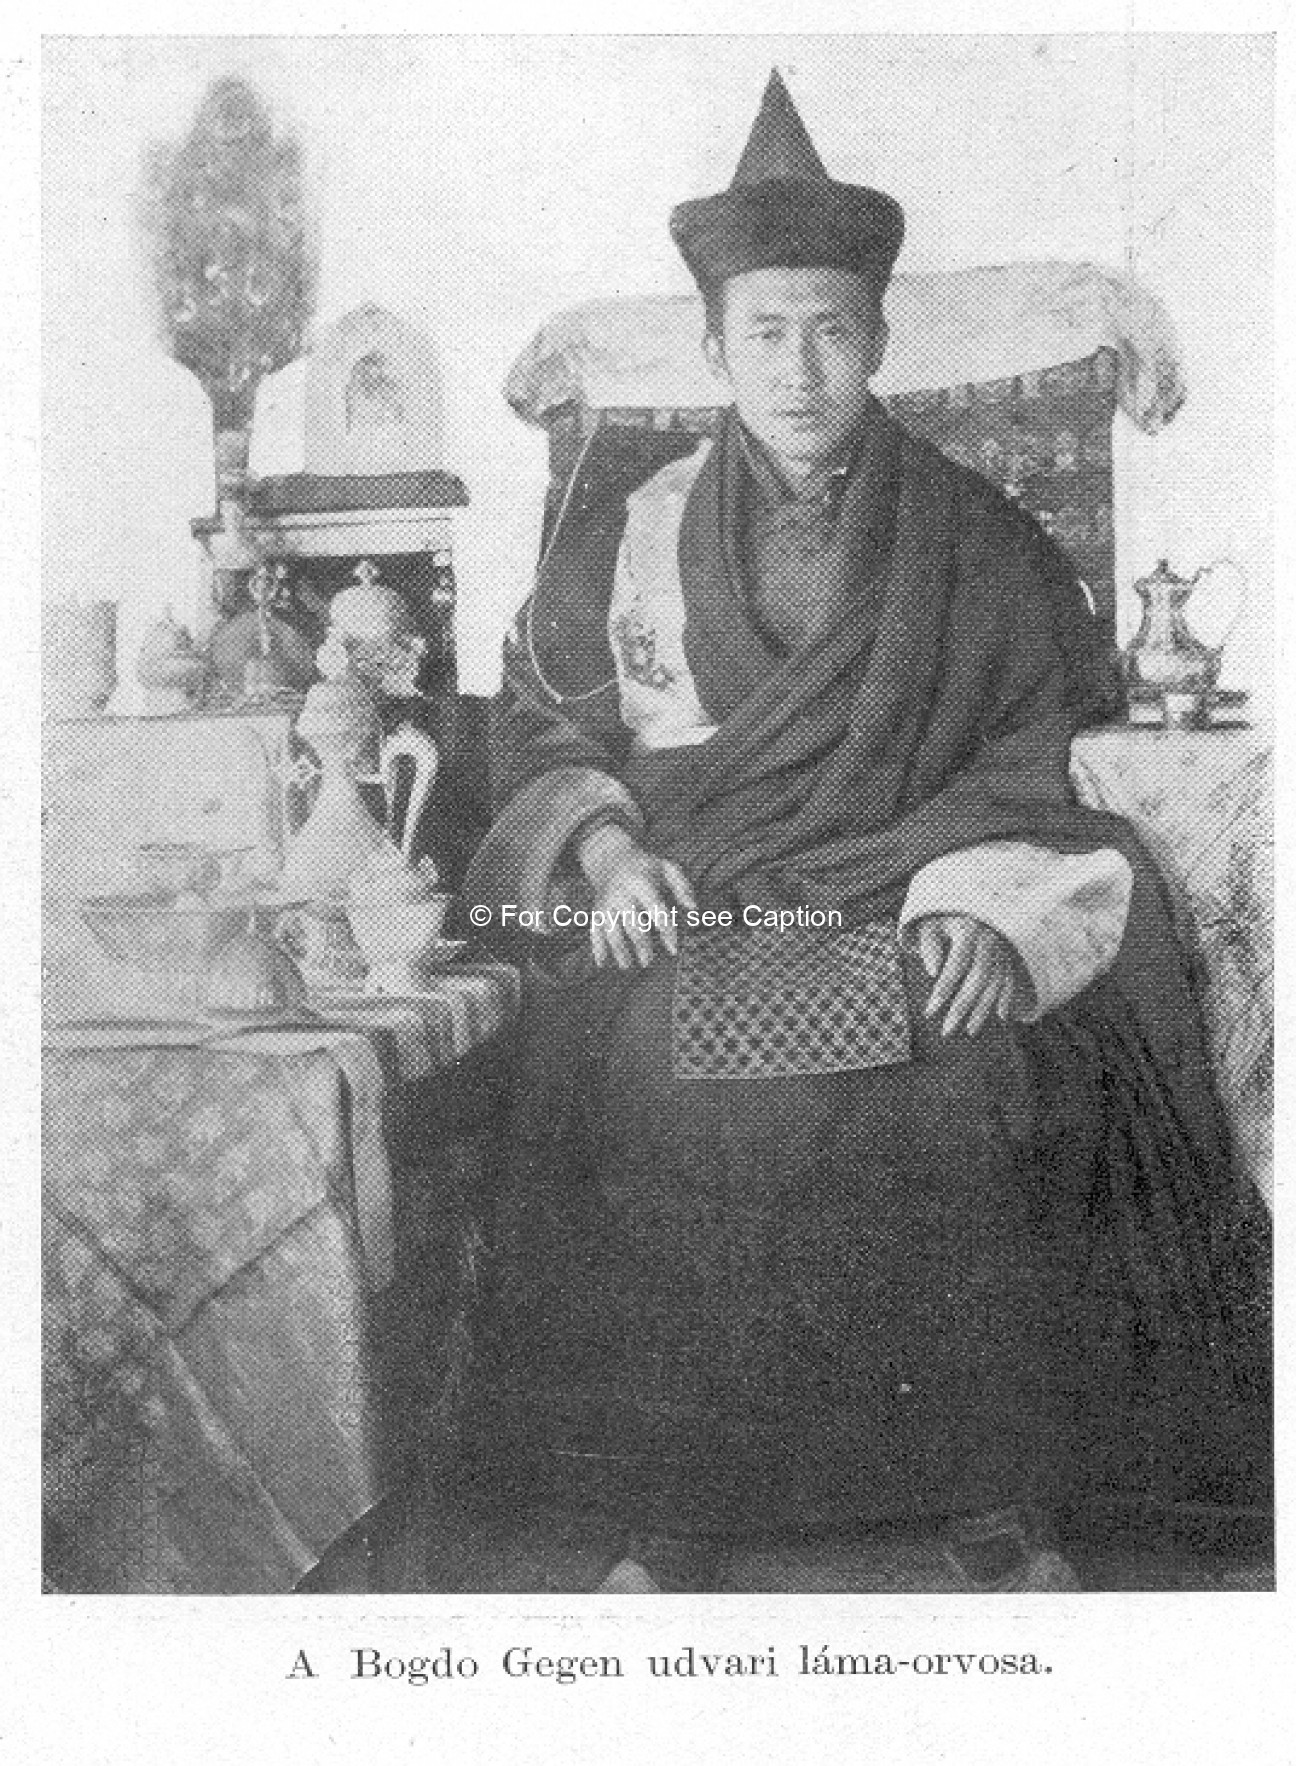 Sereenen otoch, the Bogd's monk doctor. Forbáth, L., A megujhodott Mongolia, Franklin. A Magyar Föld